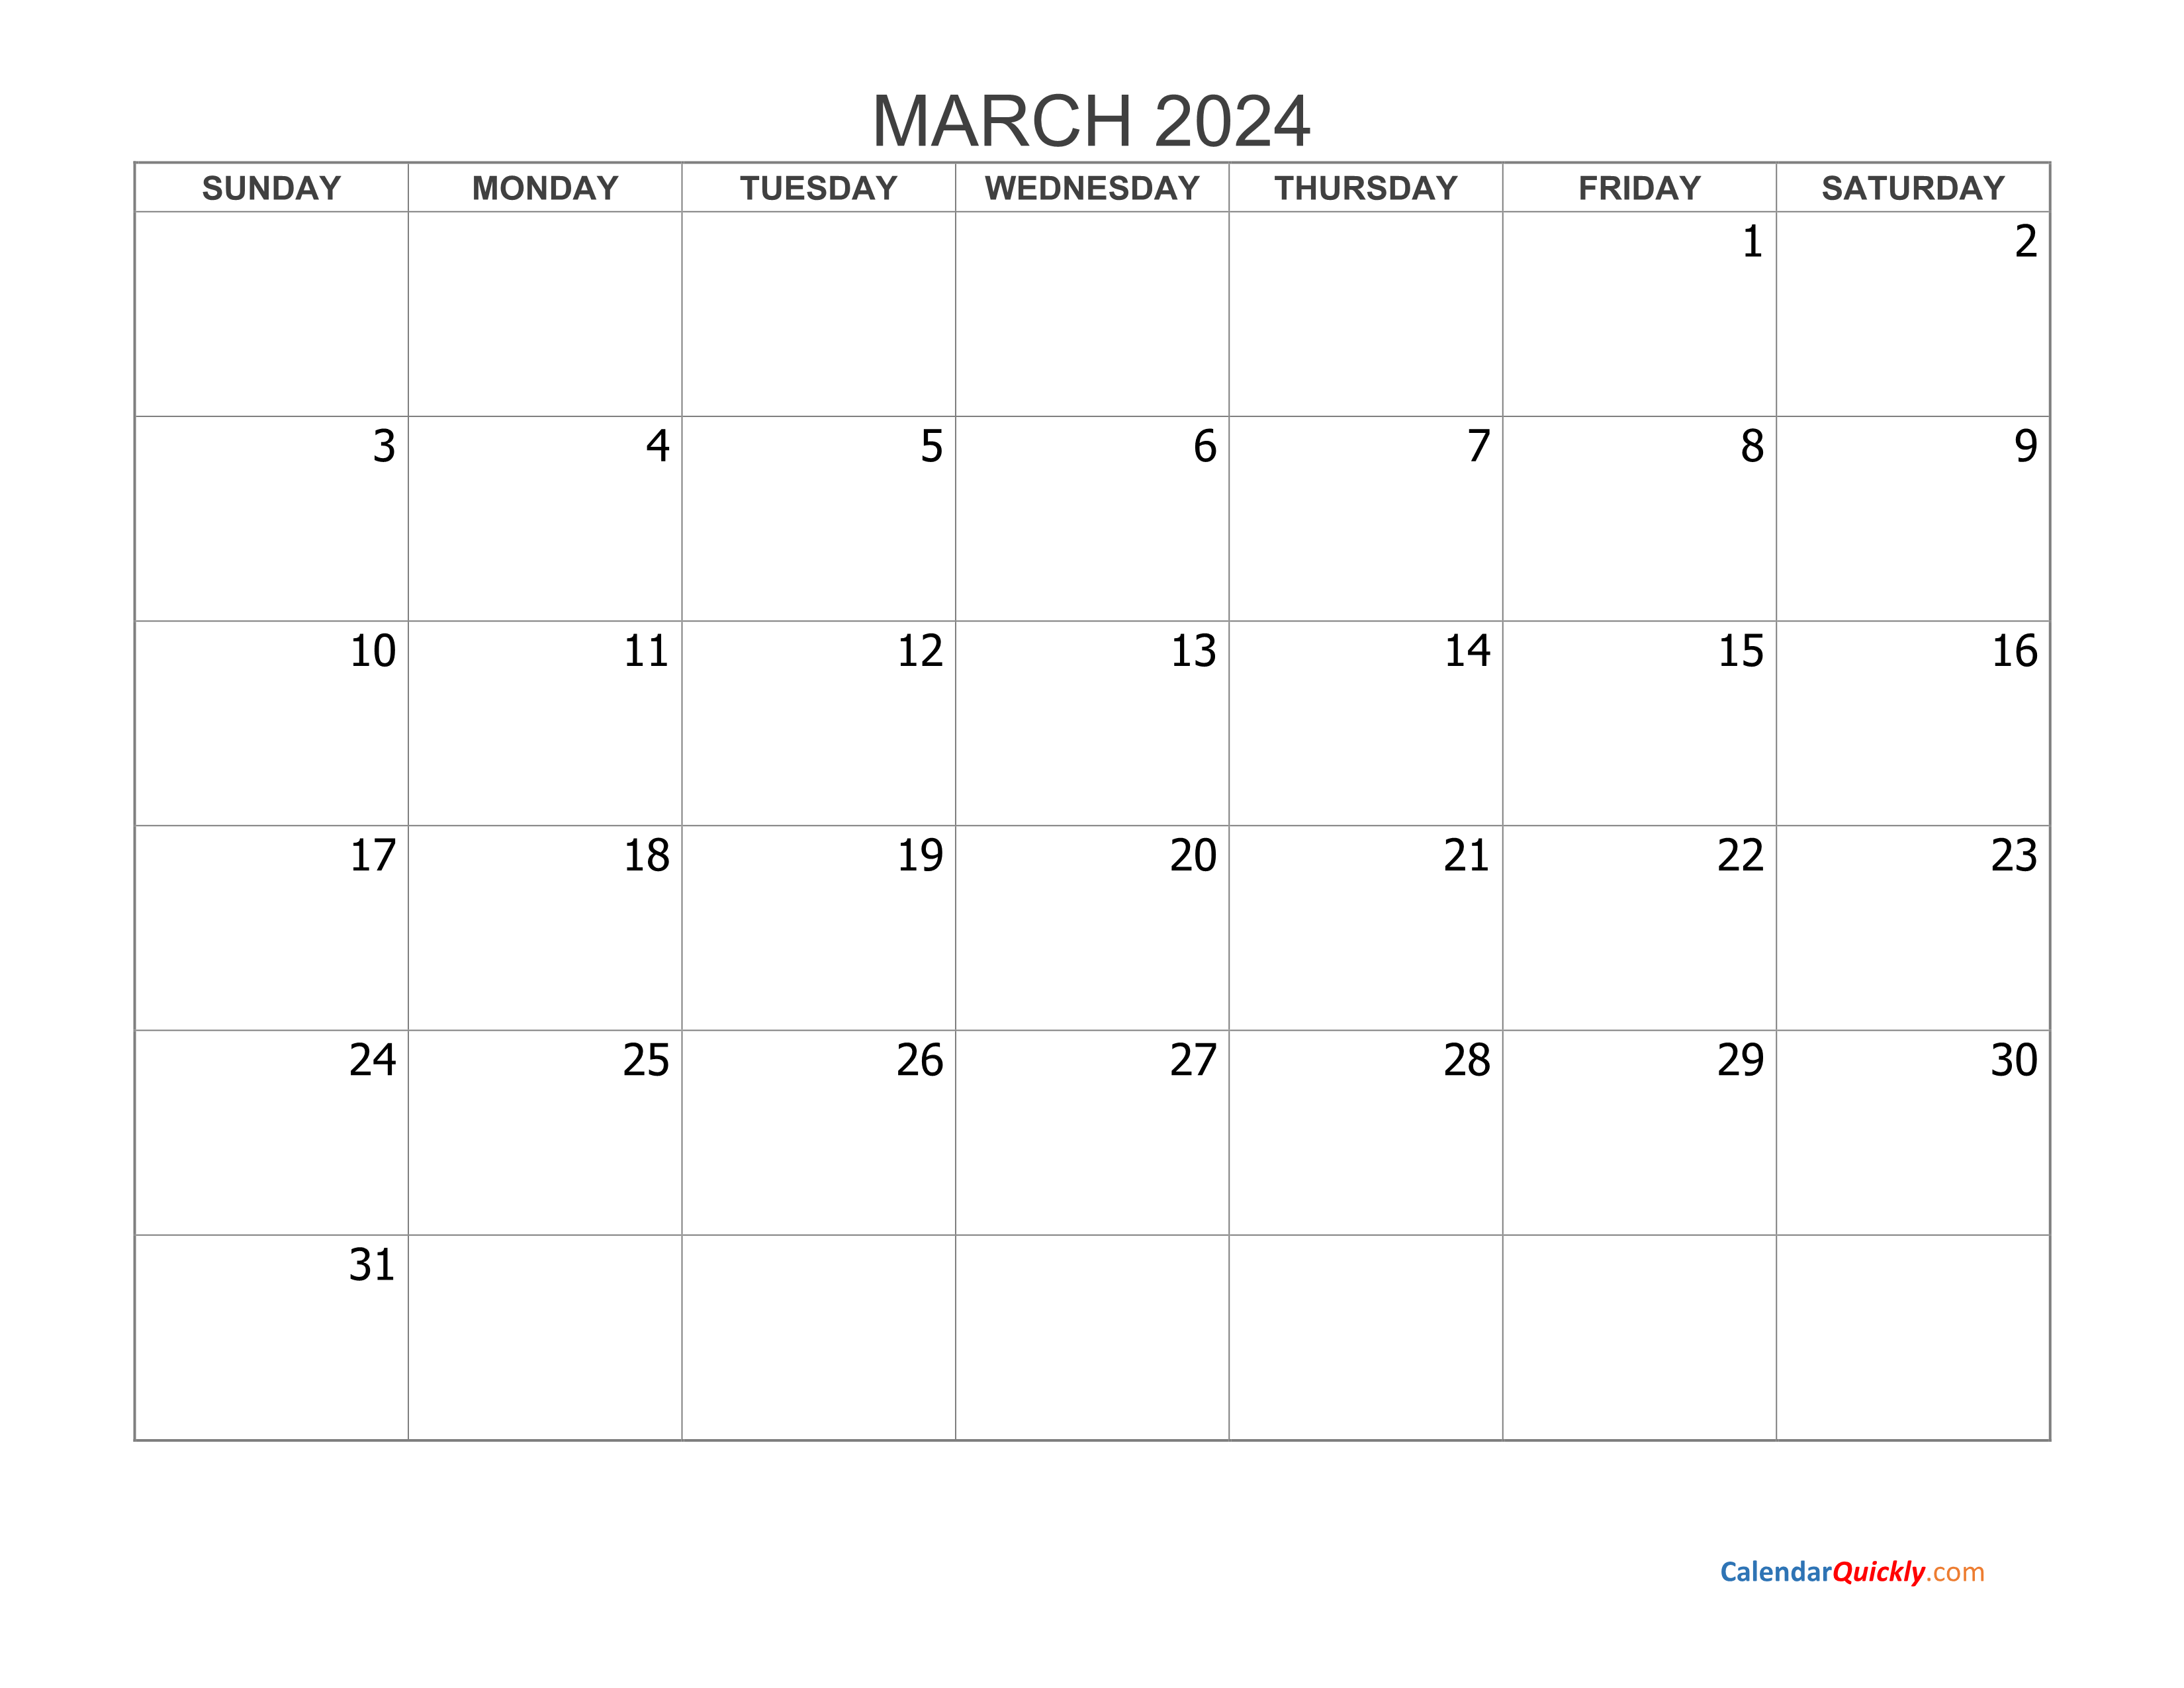 March 2024 Blank Calendar | Calendar Quickly